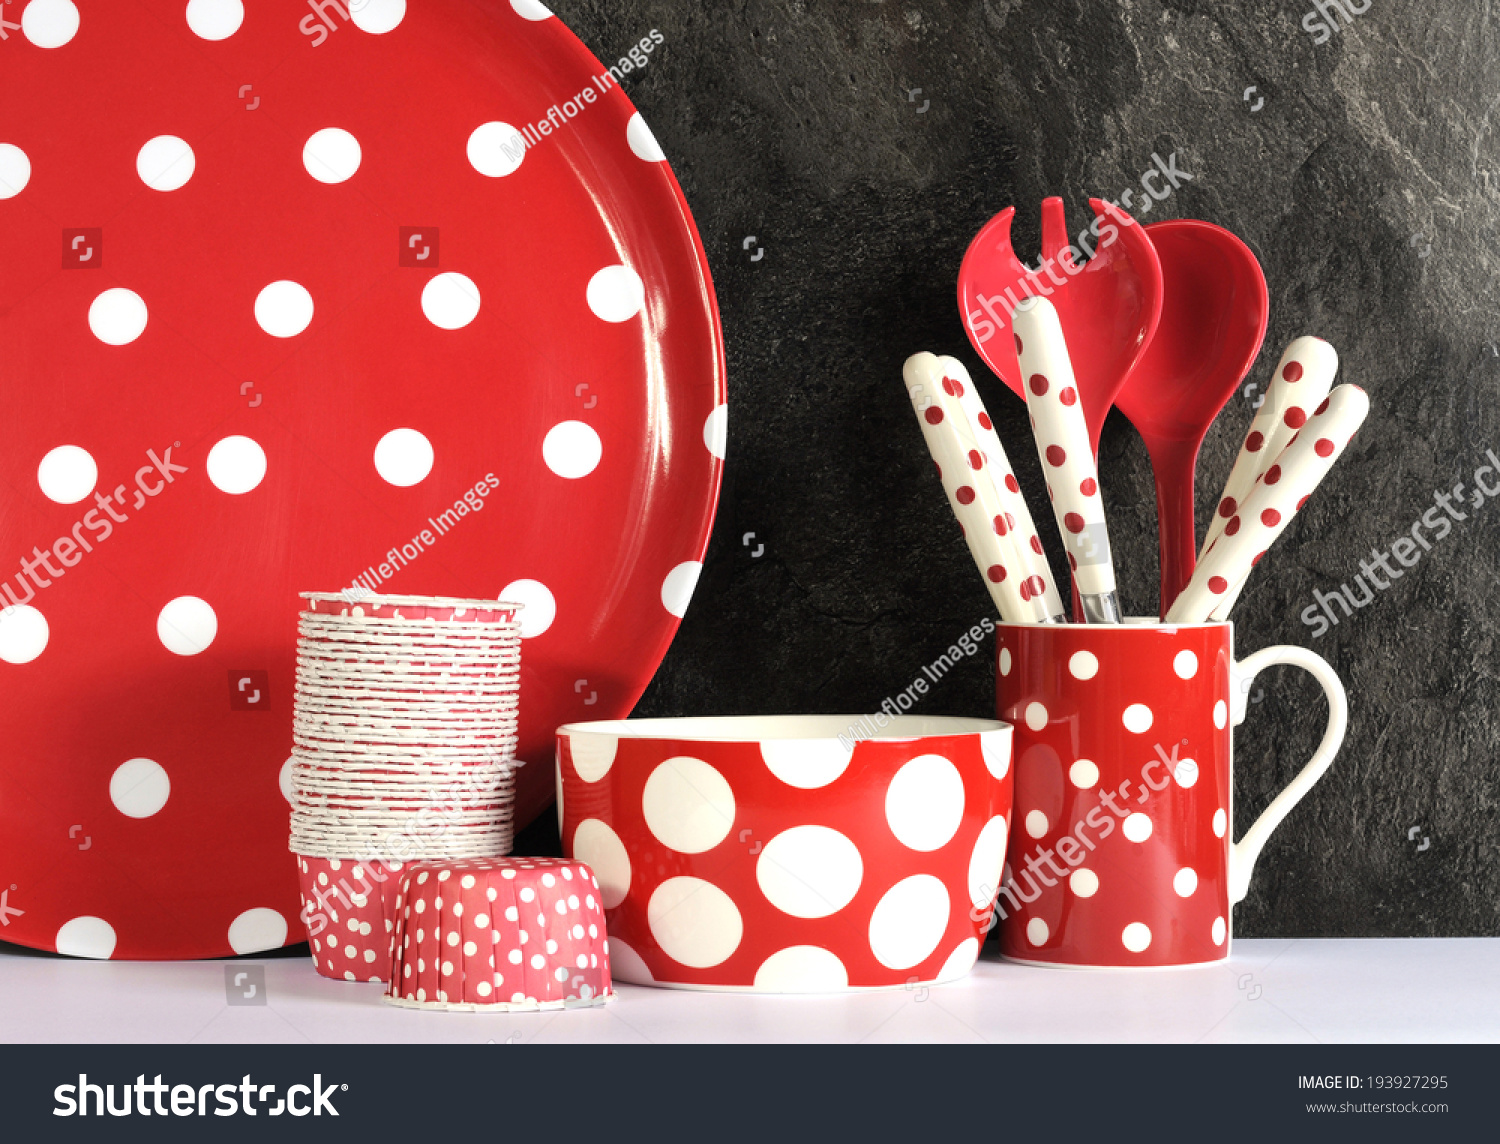 Modern Red And White Polka Dot Kitchen Setting Stock Photo